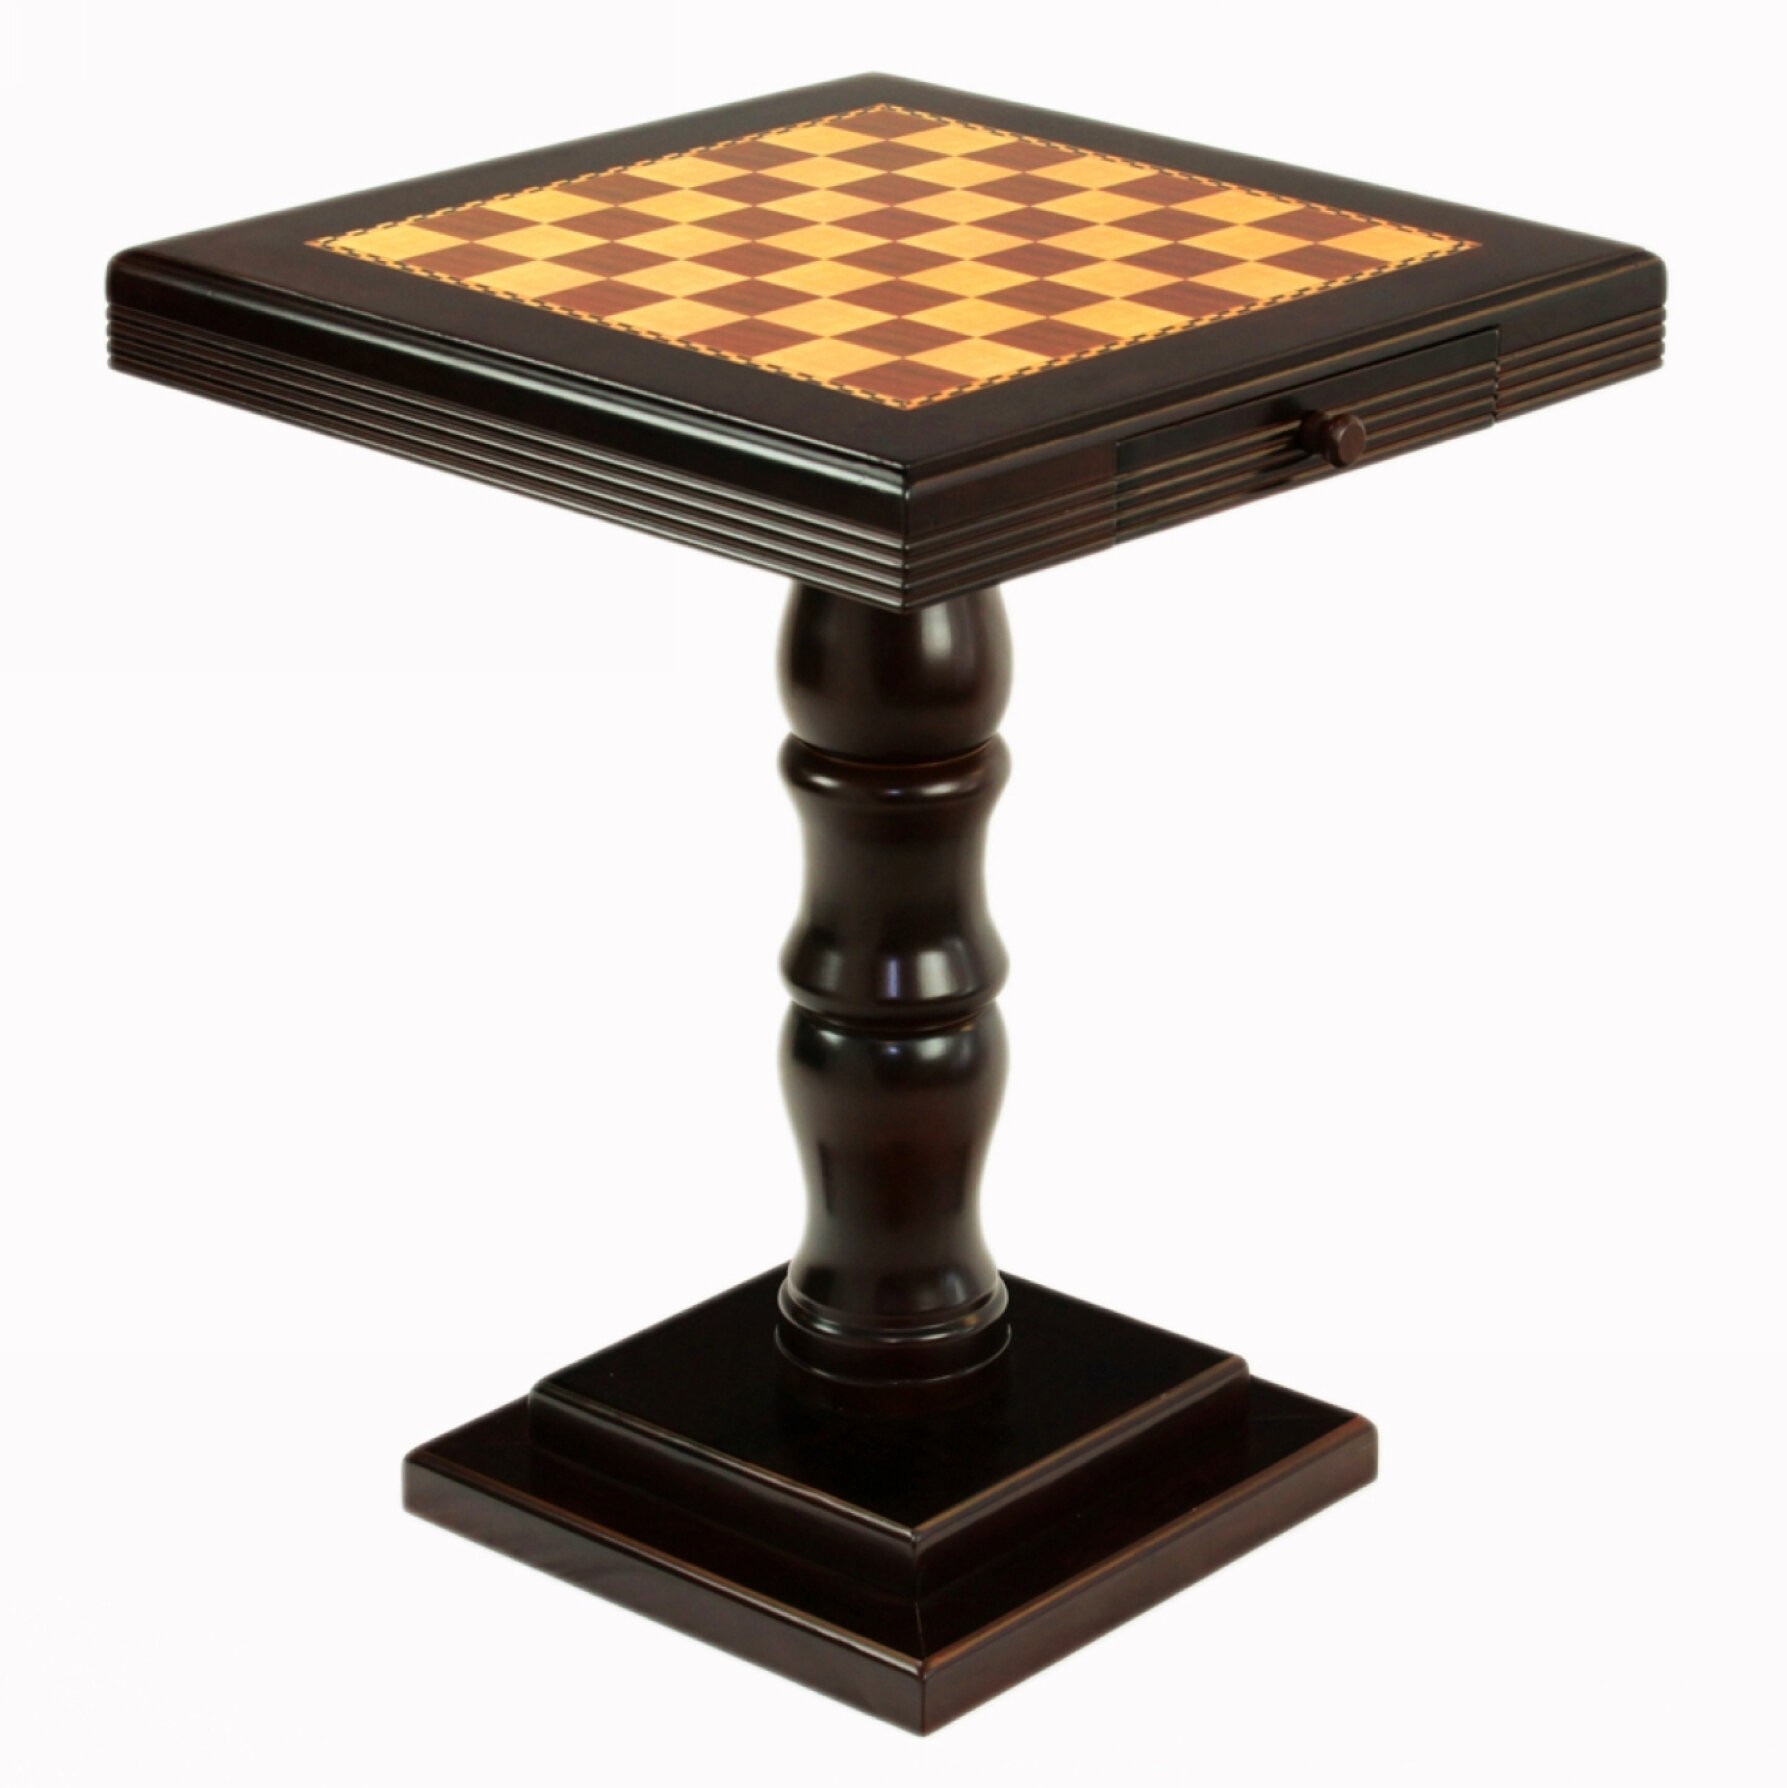 Pedestal Chess Table